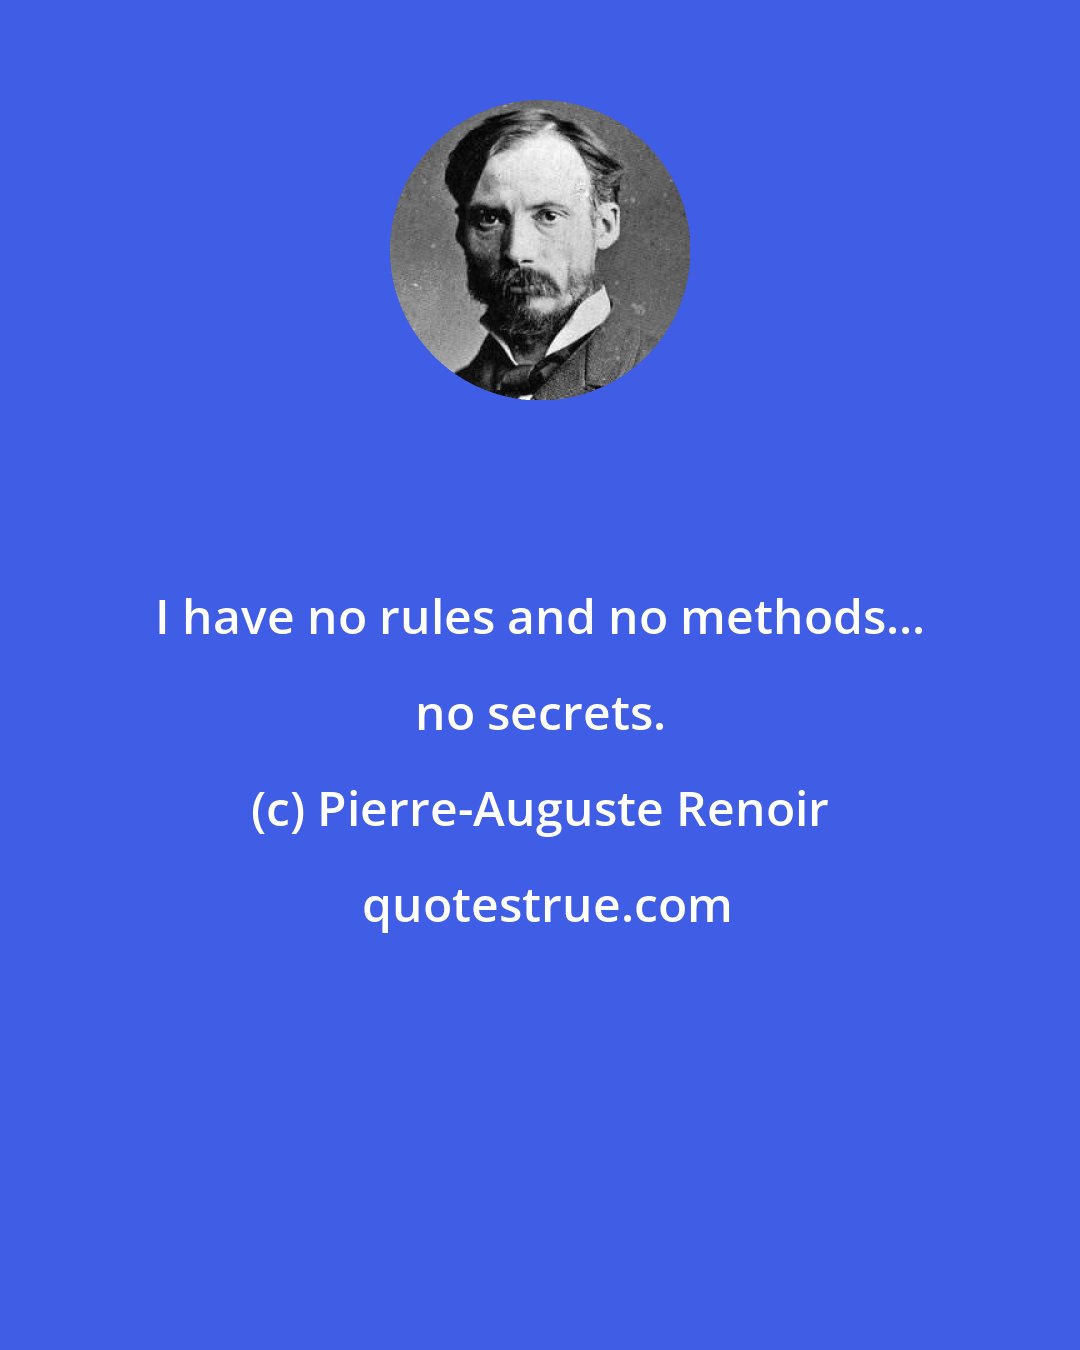 Pierre-Auguste Renoir: I have no rules and no methods... no secrets.